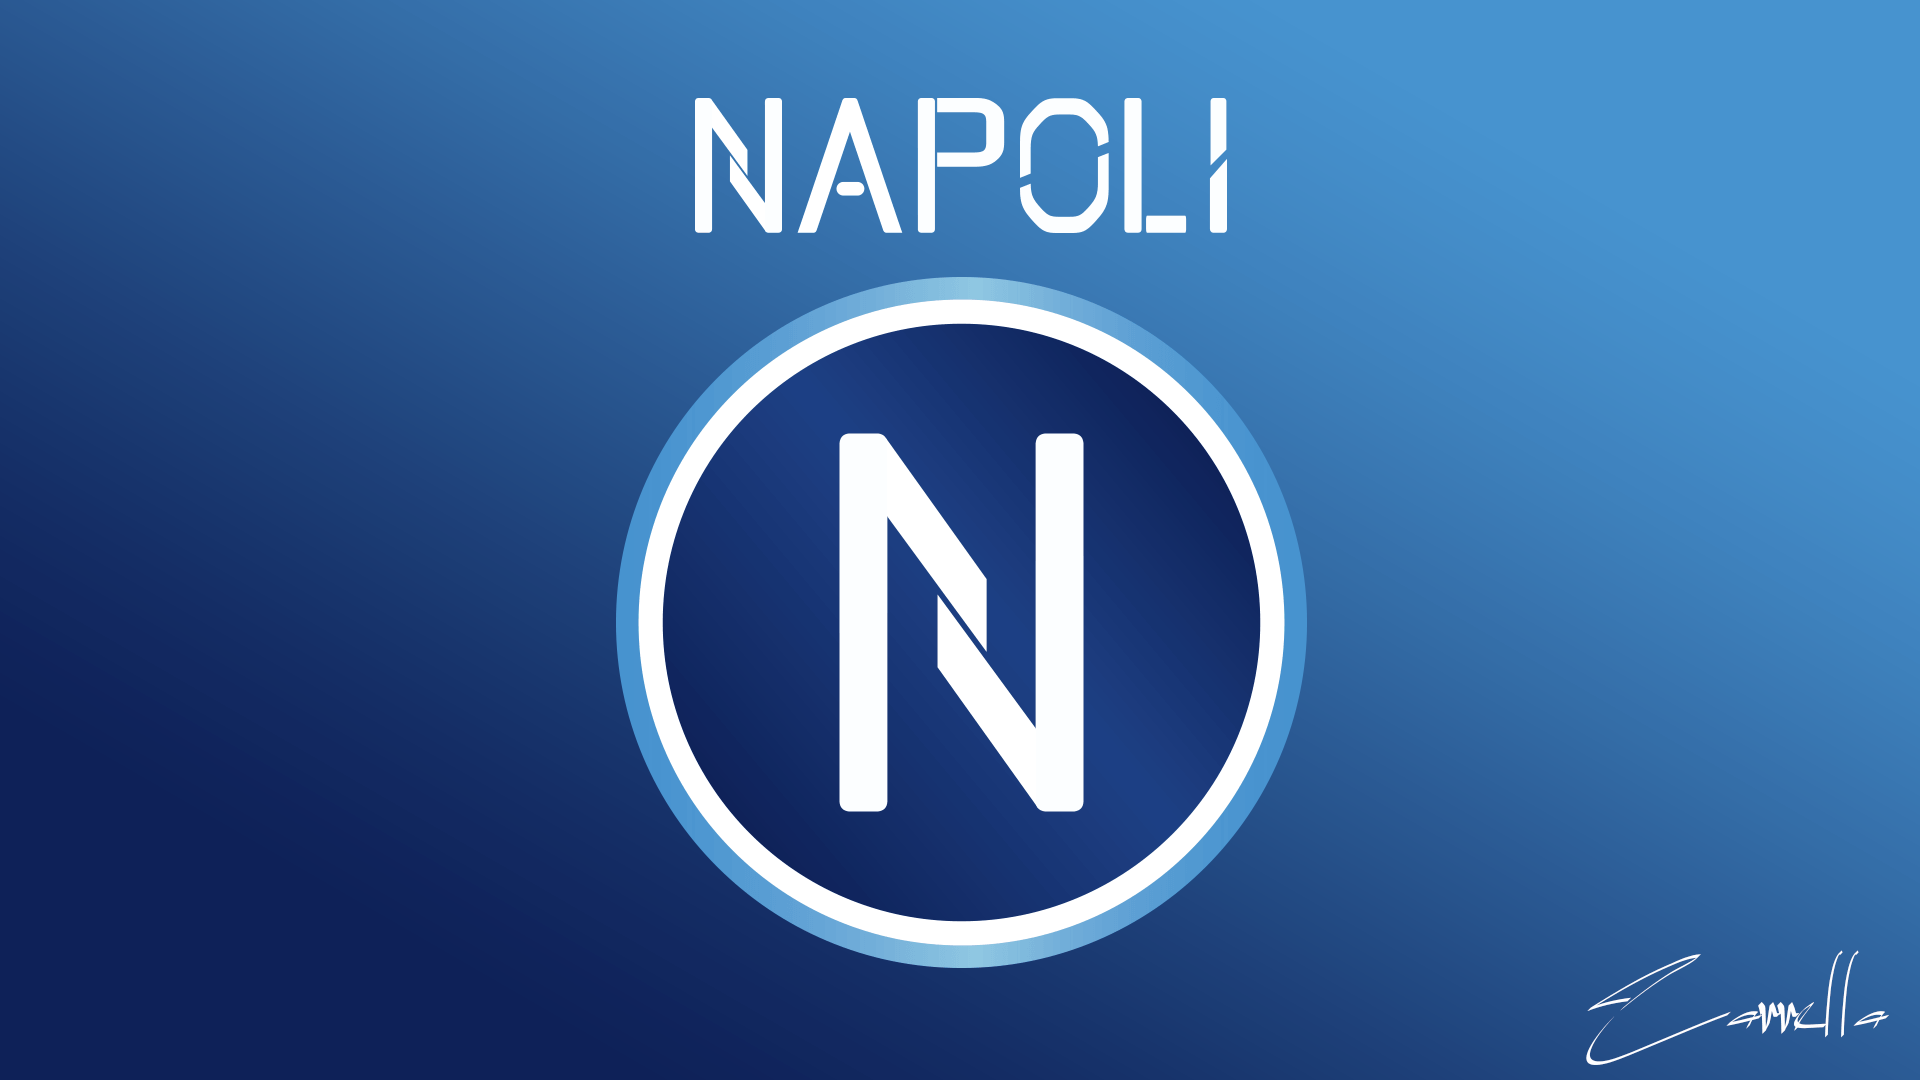 Napoli Logo - New Napoli logo idea [minimal] What do you think? : sscnapoli